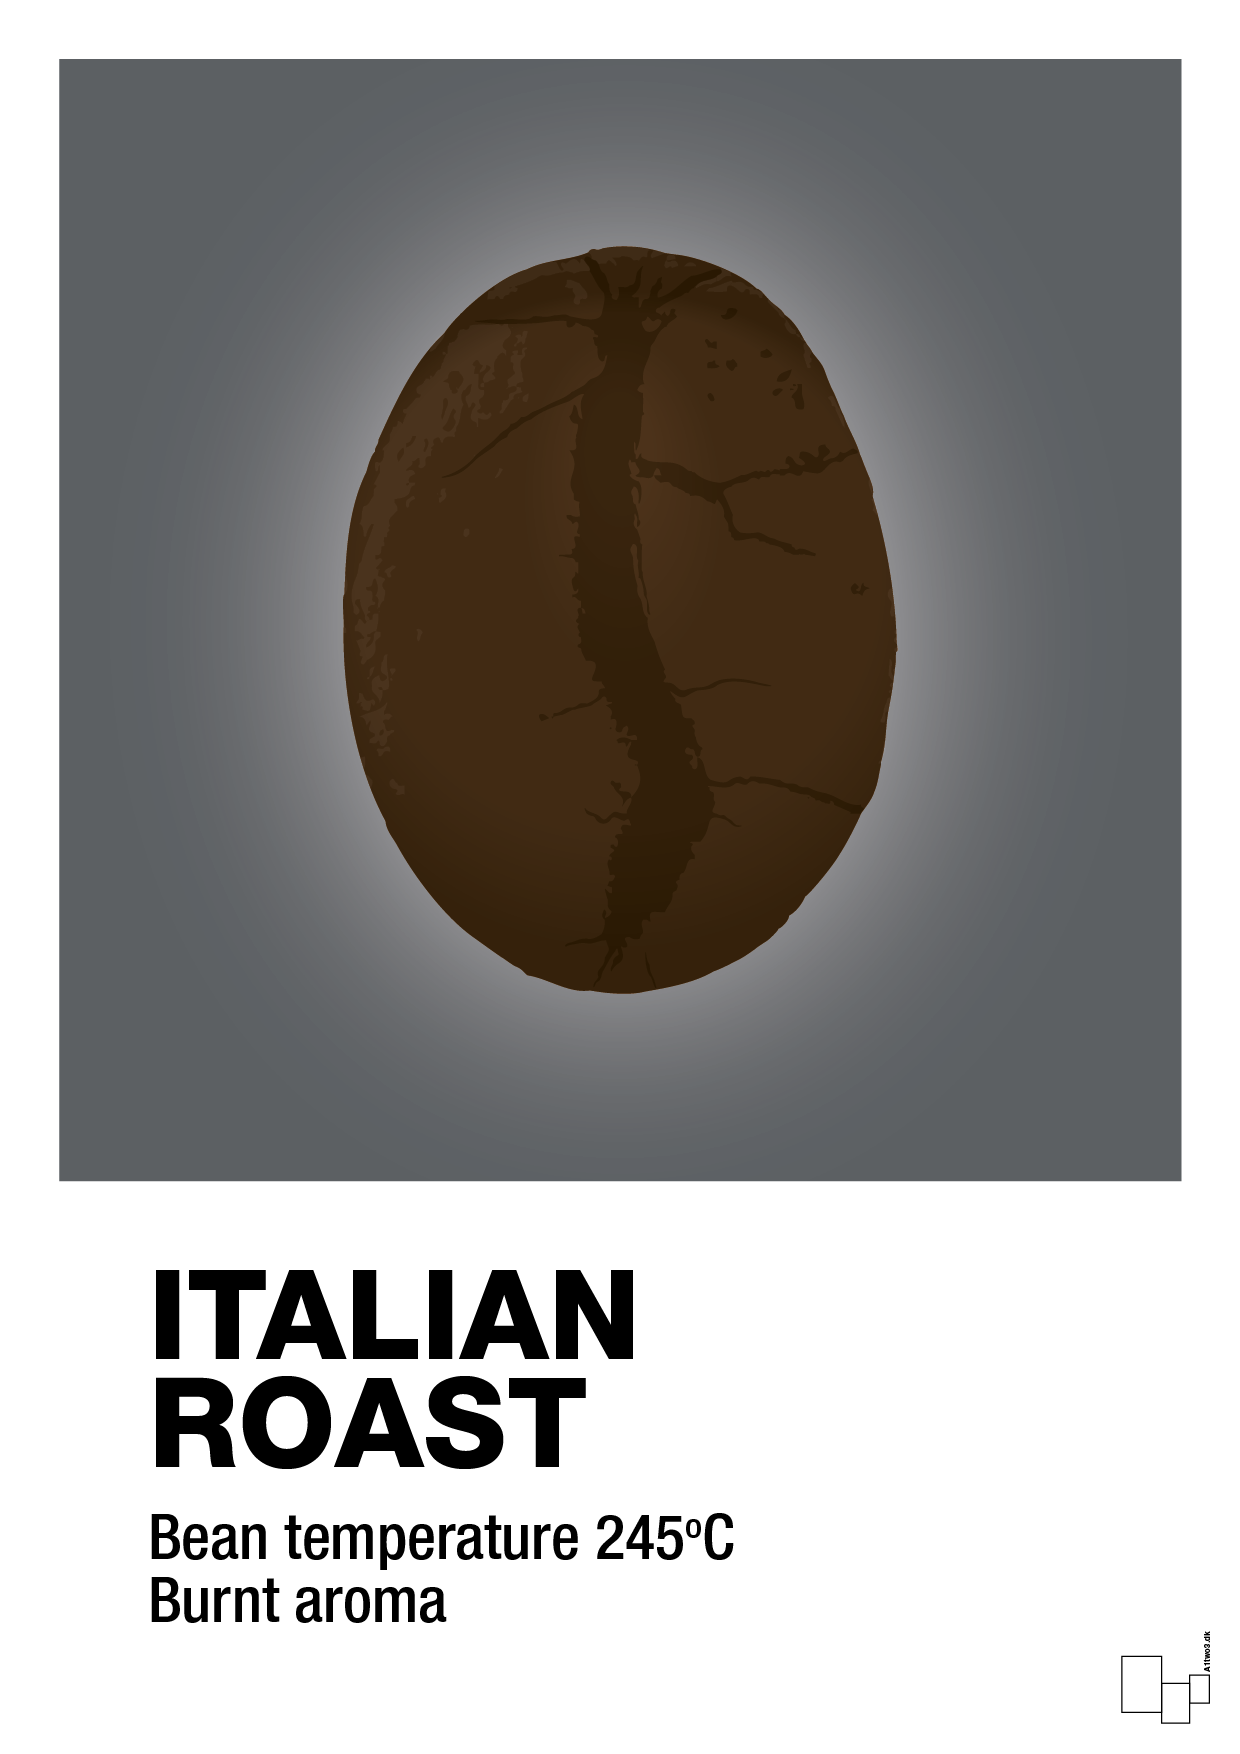 italian roast - Plakat med Mad & Drikke i Graphic Charcoal